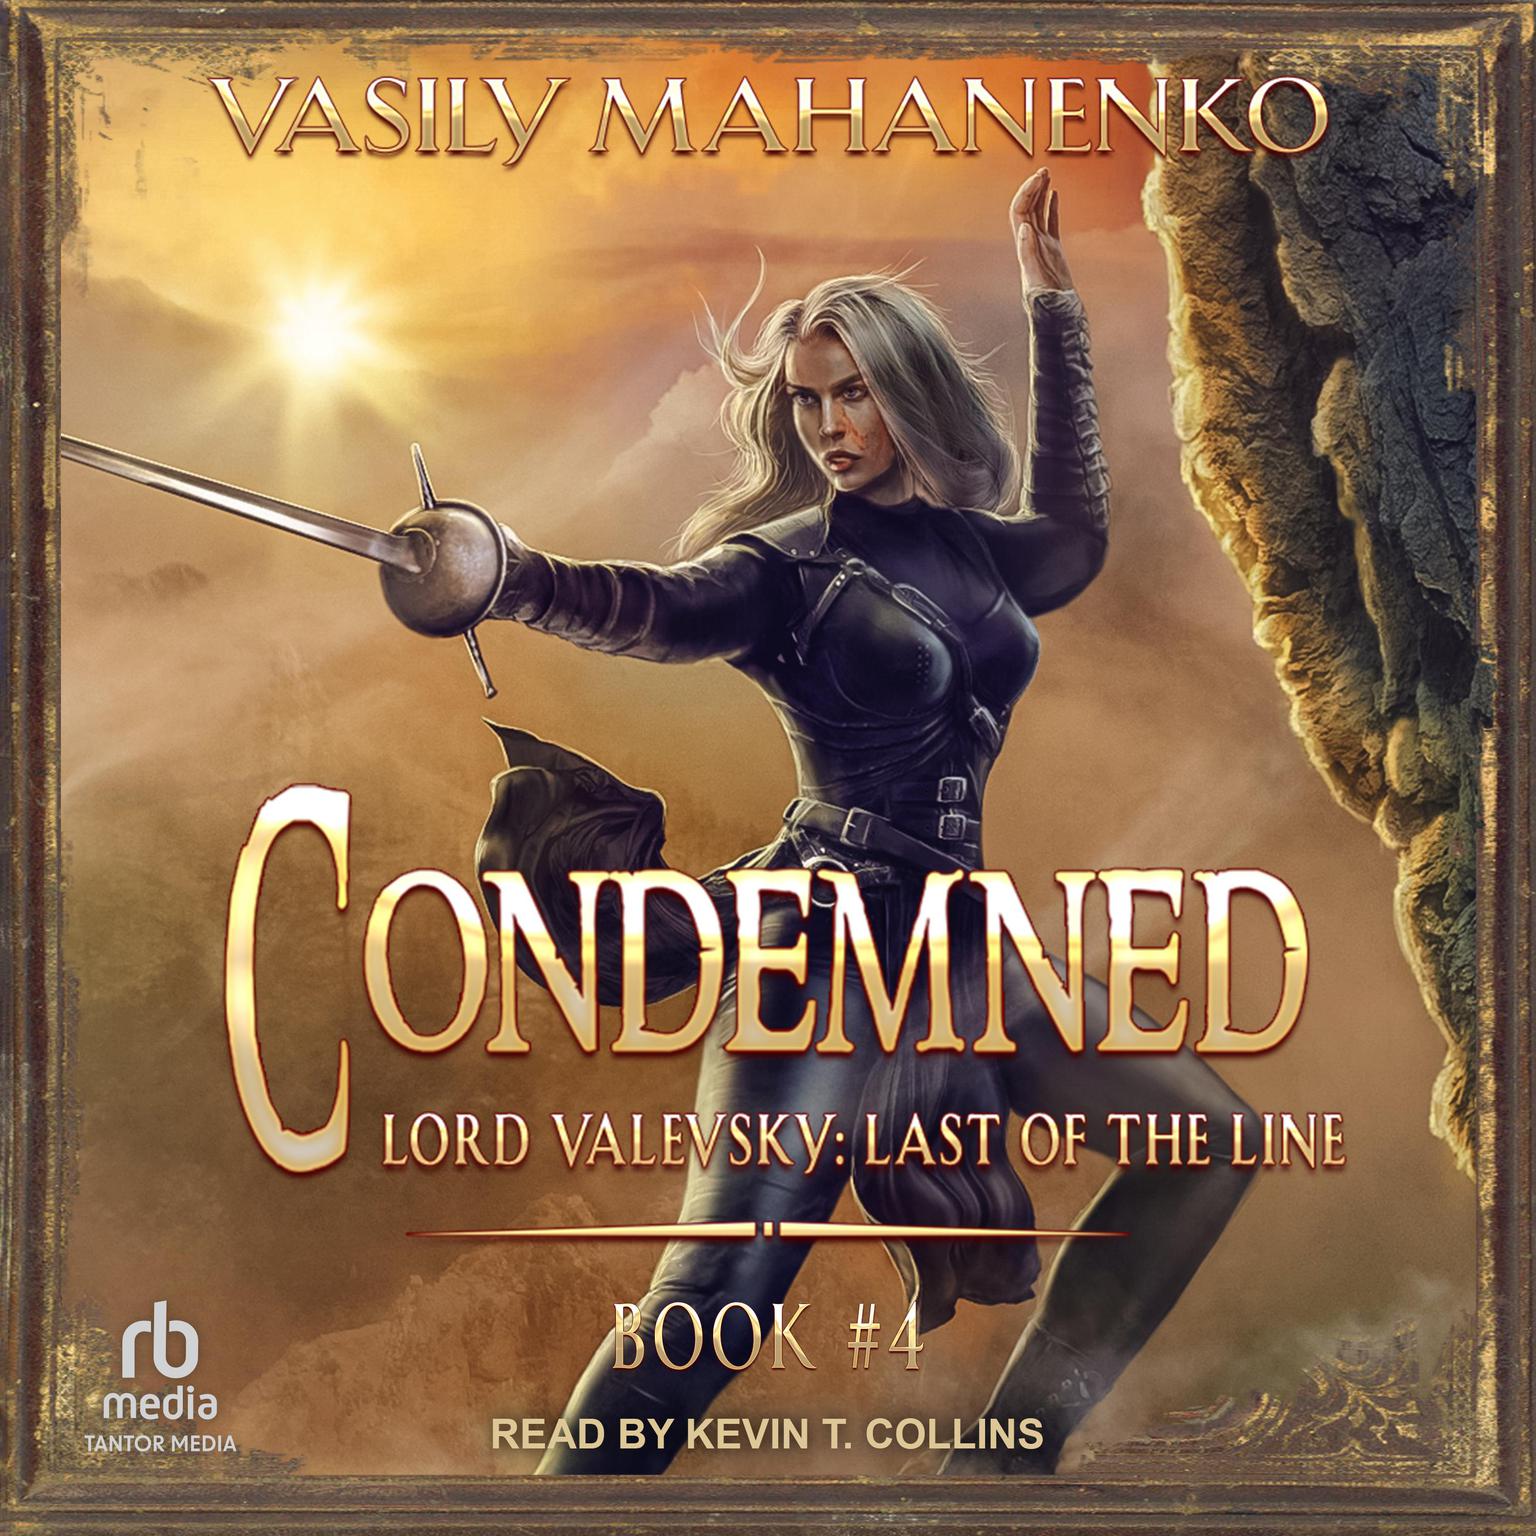 Condemned: Lord Valevsky Book #4 Audiobook, by Vasily Mahanenko